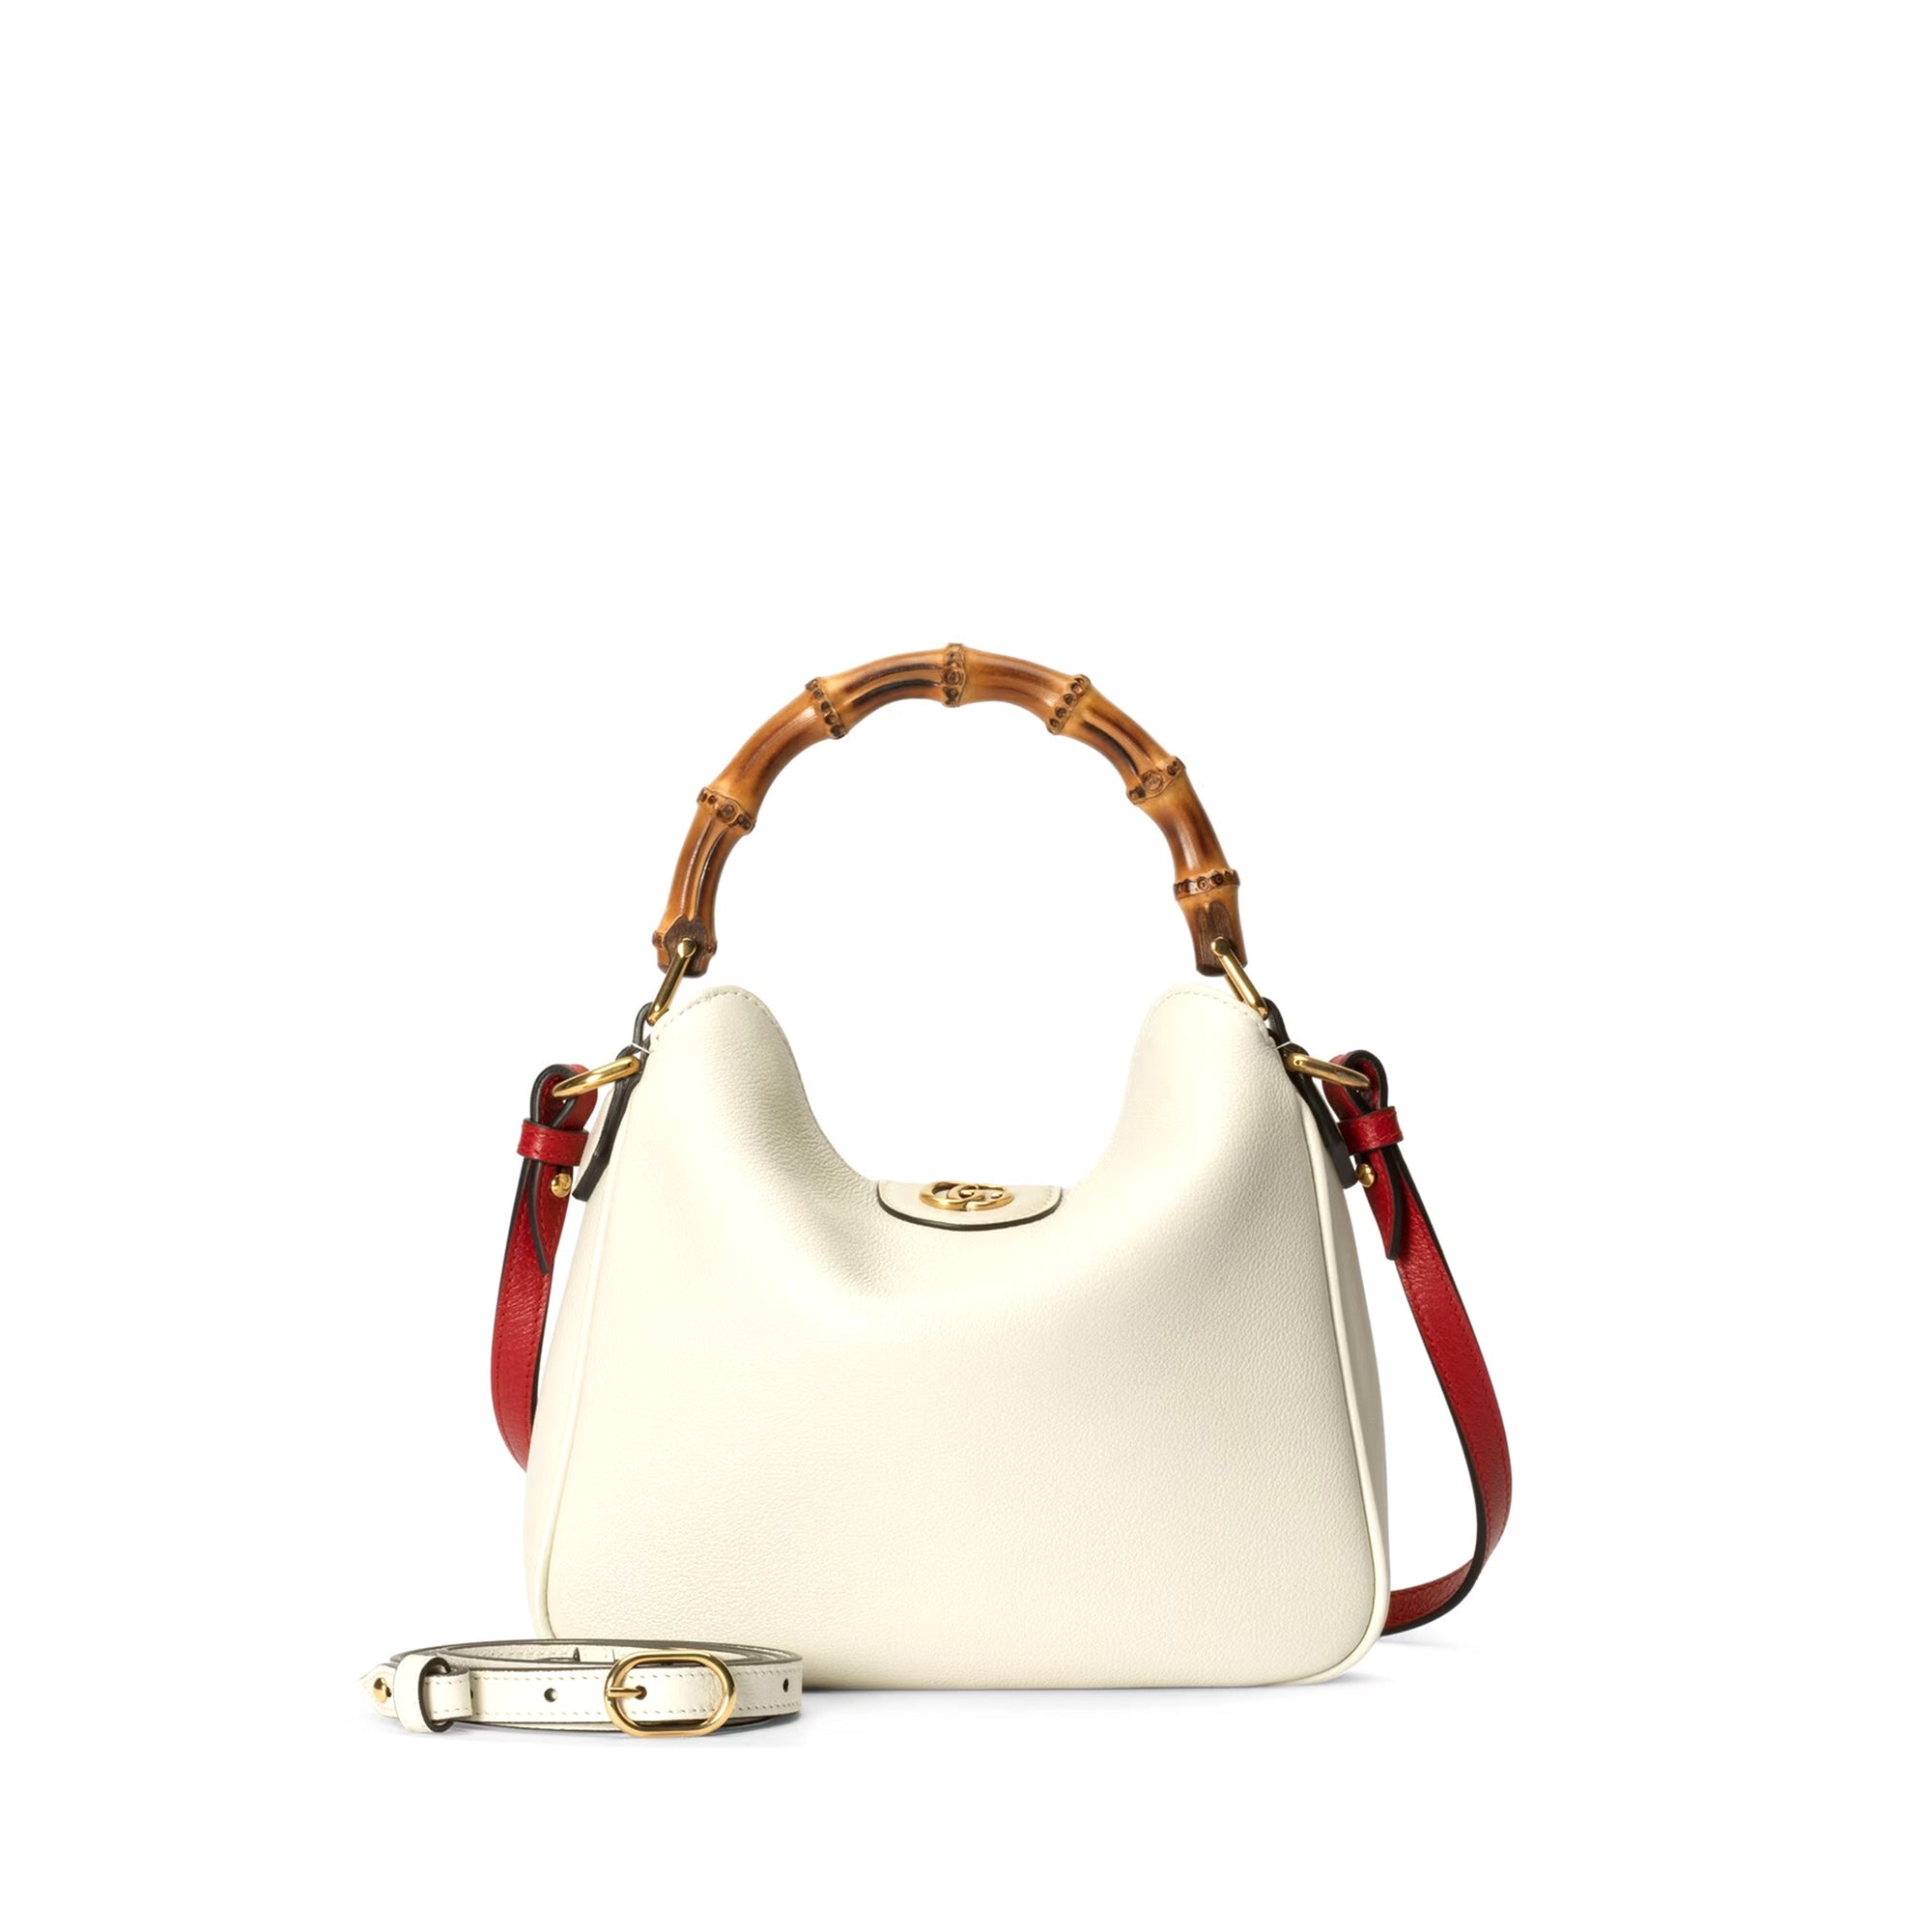 Gucci - Women’s Diana Small Shoulder Bag - (White) view 3